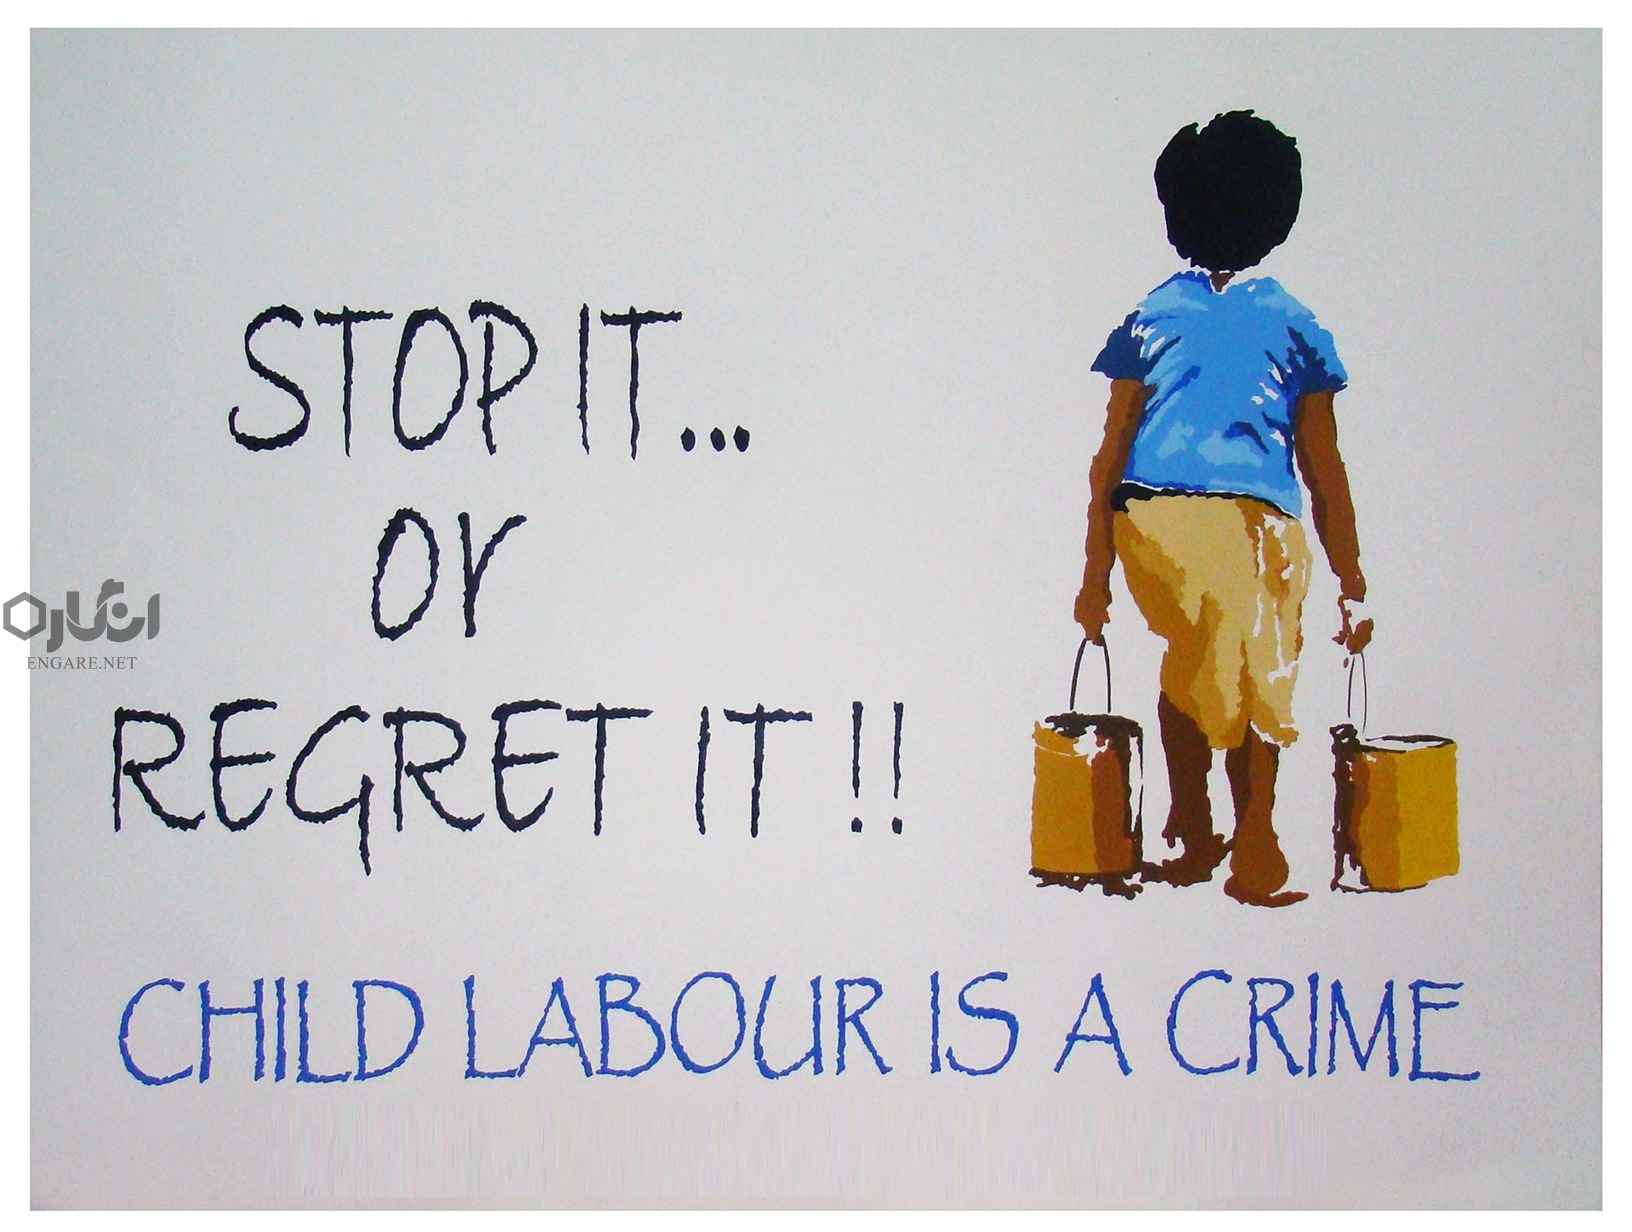 8071263edd241decb66ad079ca9d5b79 - کار کودکان را متوقف کنید (گالری عکس) - کودکان کار, کودکان خیابانی, کار کودکان, حقوق کودک, stop child labour